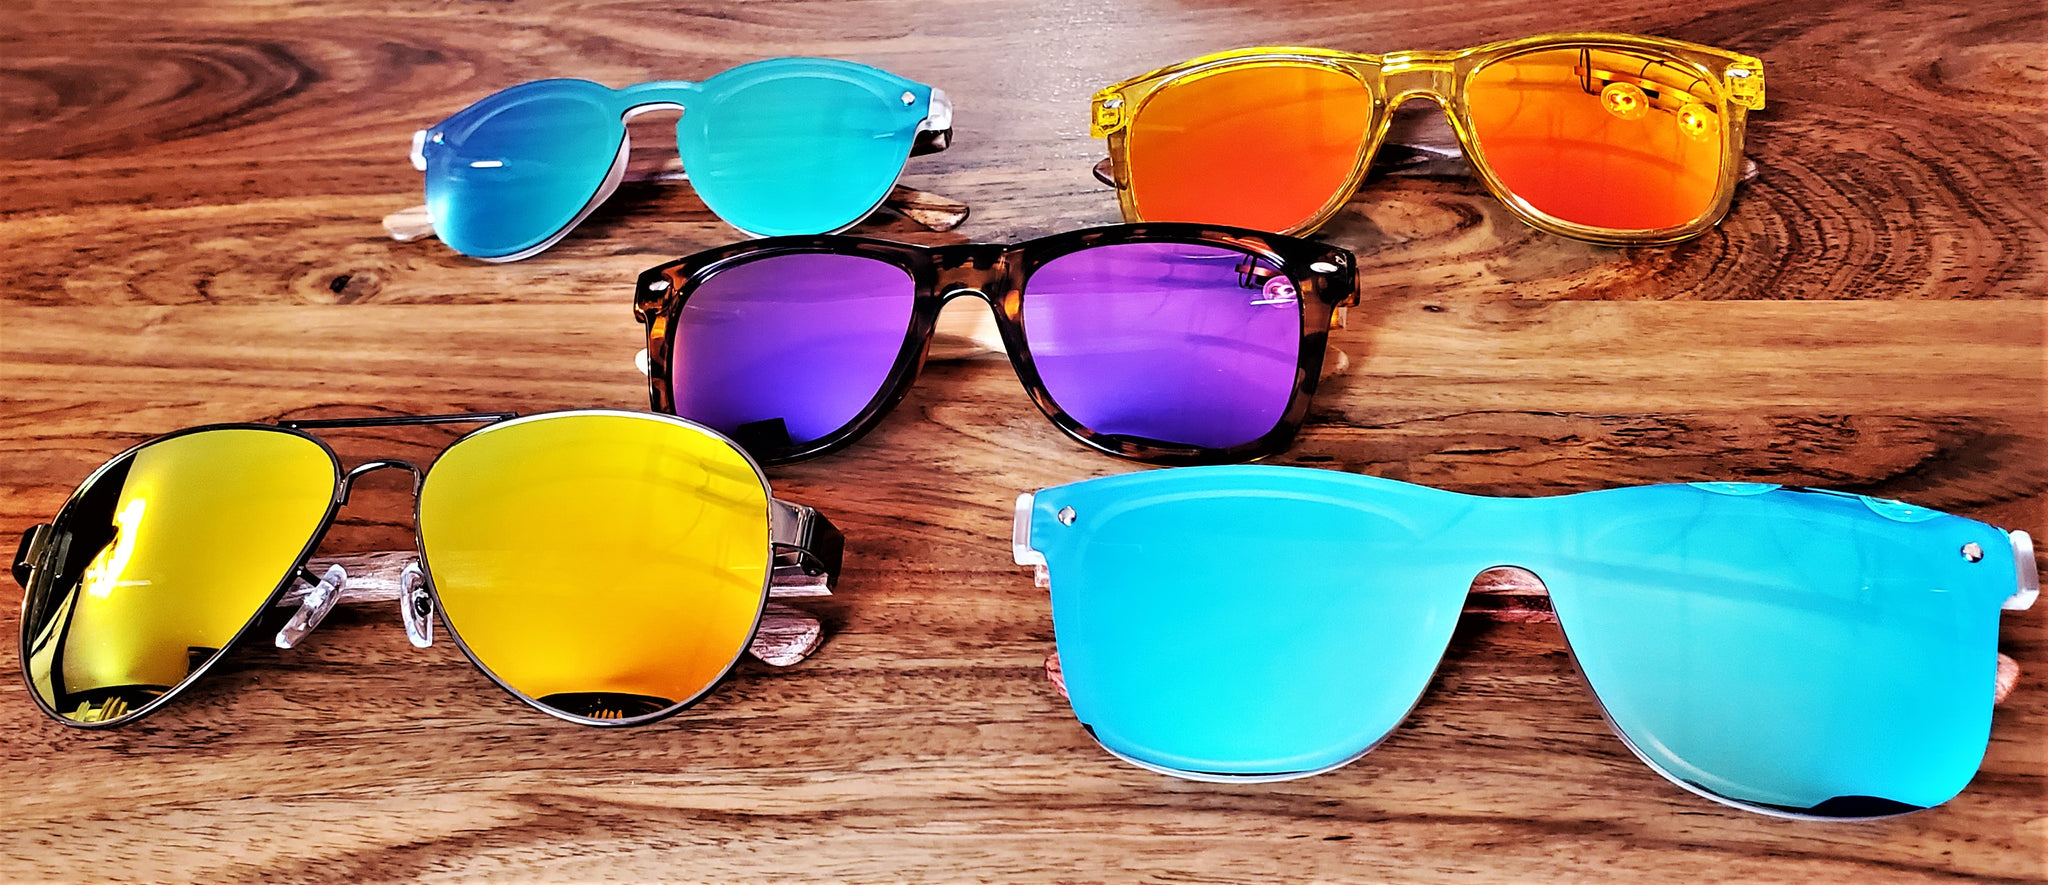 Polarized Sunglasses - Your Future's So Bright Turquoise Dream